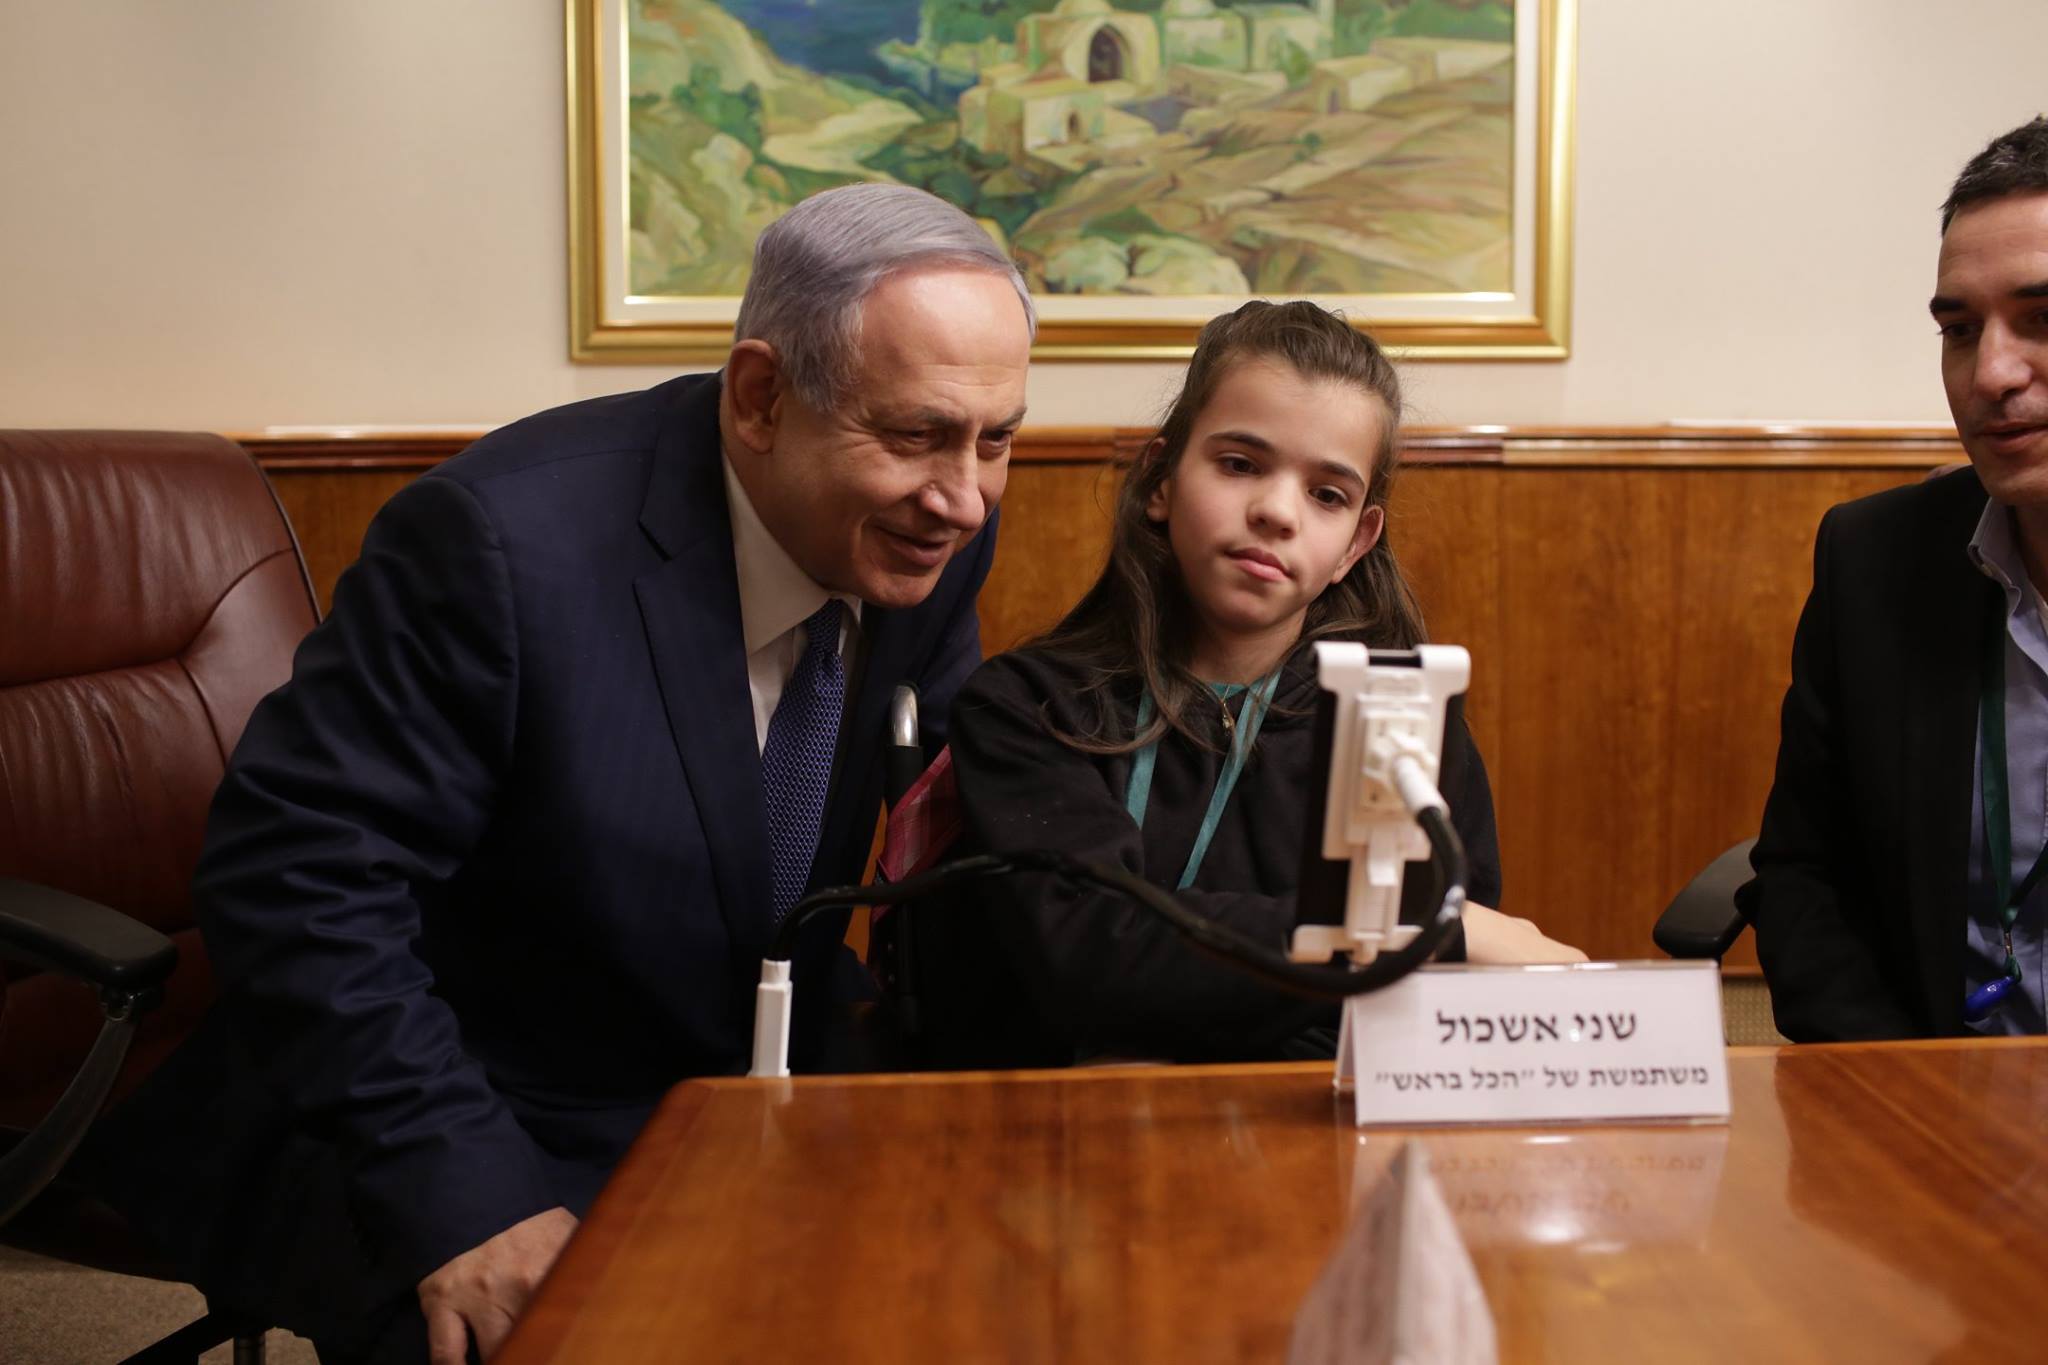 Shani Eshkol, 13, shows Israeli Prime Minister Benjamin Netanyahu how to operate her Sesame Phone using only head movements. Photo by Eyal Gaziel